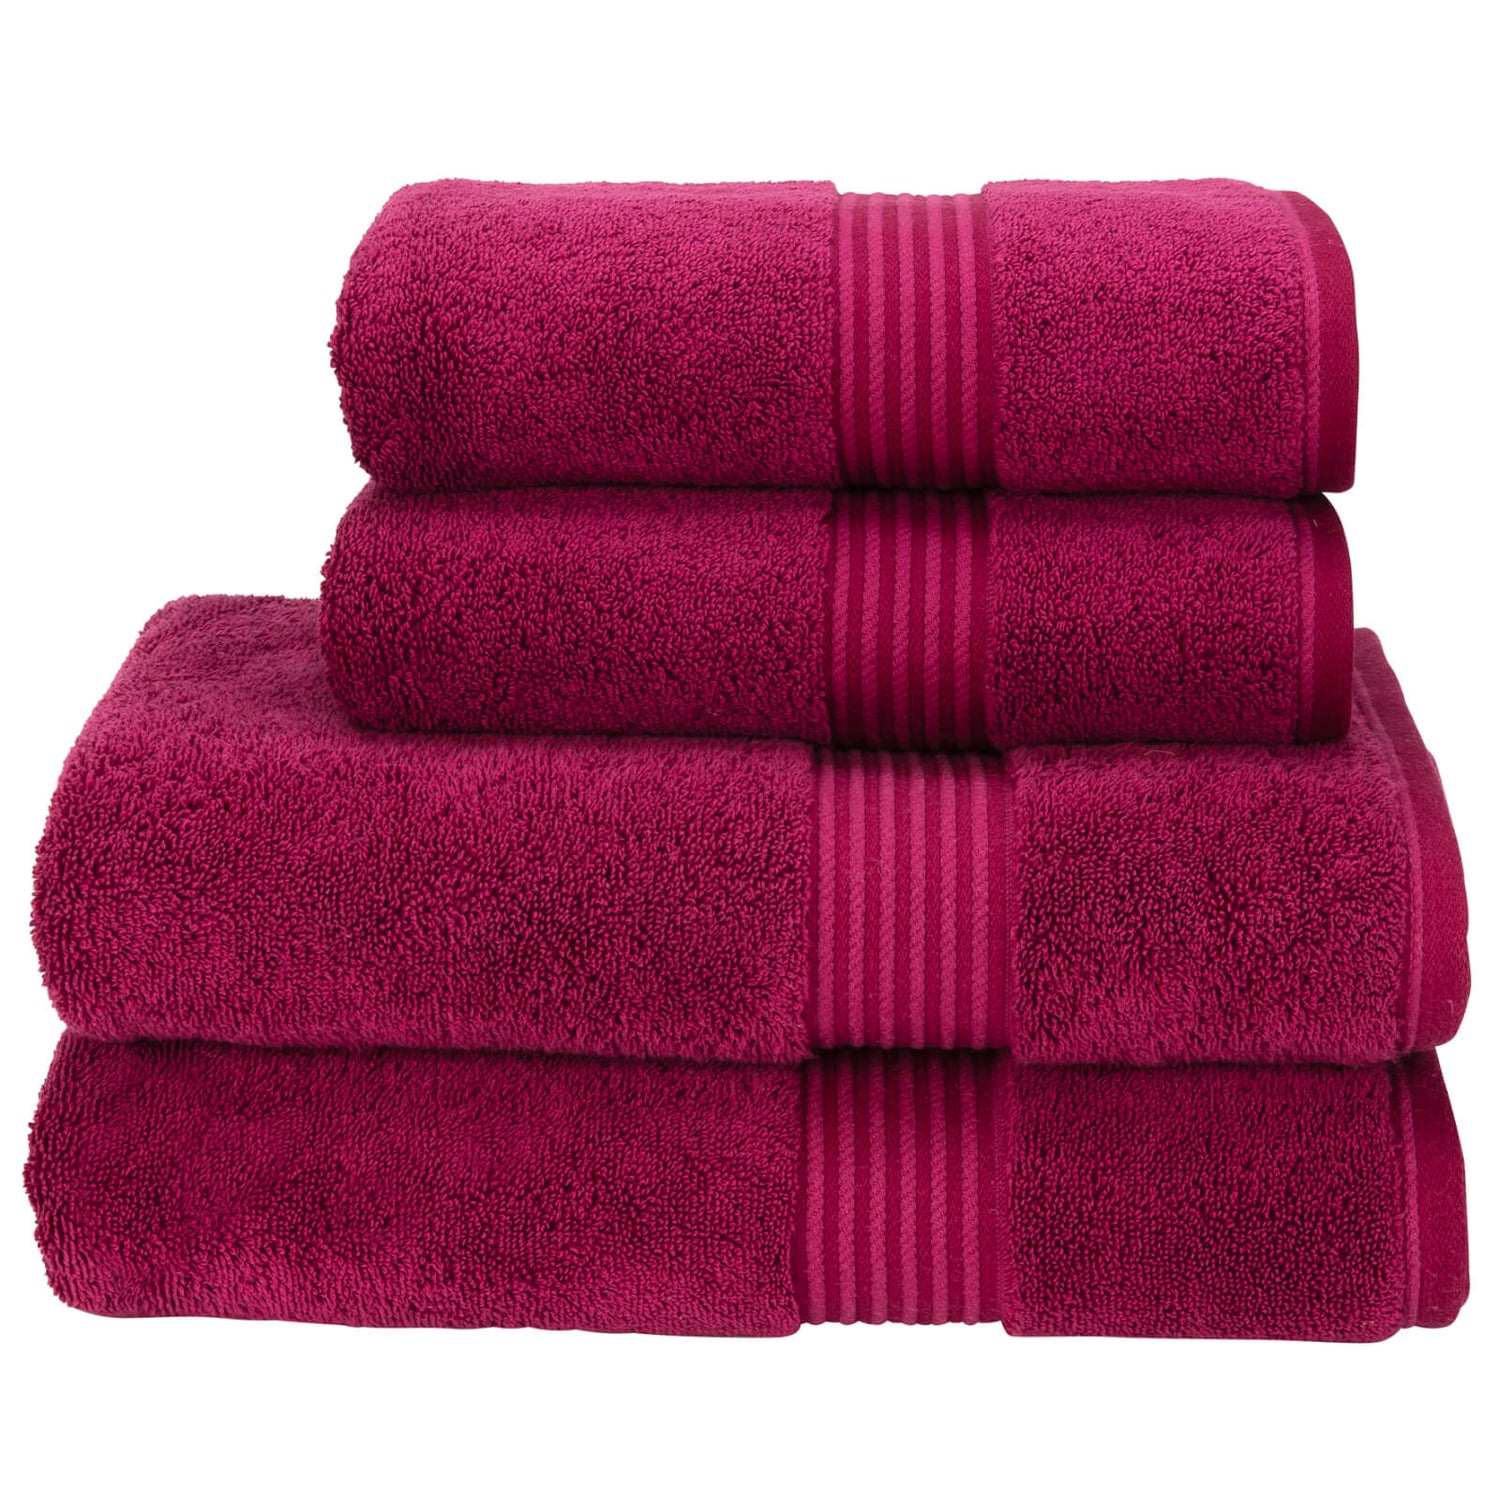 Christy Supreme Hygro Towel Range - Raspberry - Hand Towel (Set of 2)